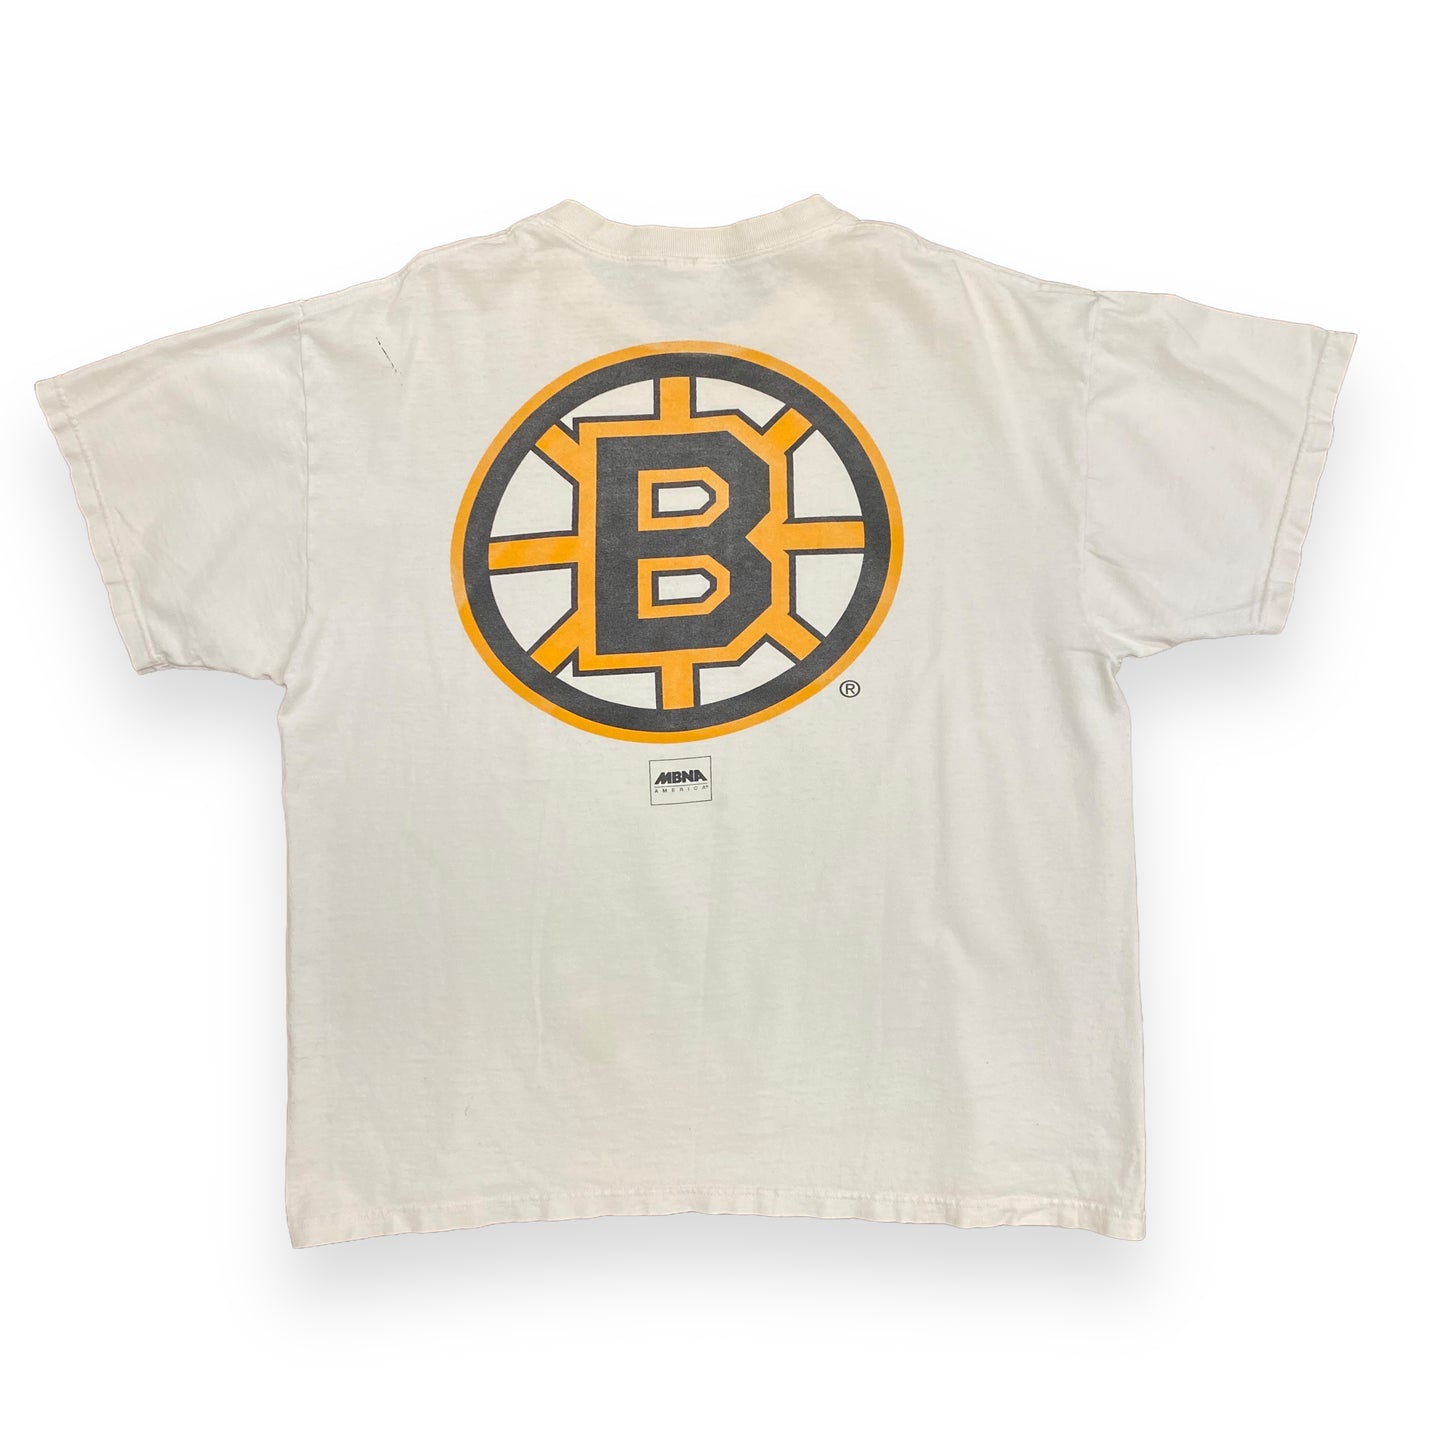 Vintage 1990s Boston Bruins NHL Thrashed "Pooh Bear" Tee - Size Large